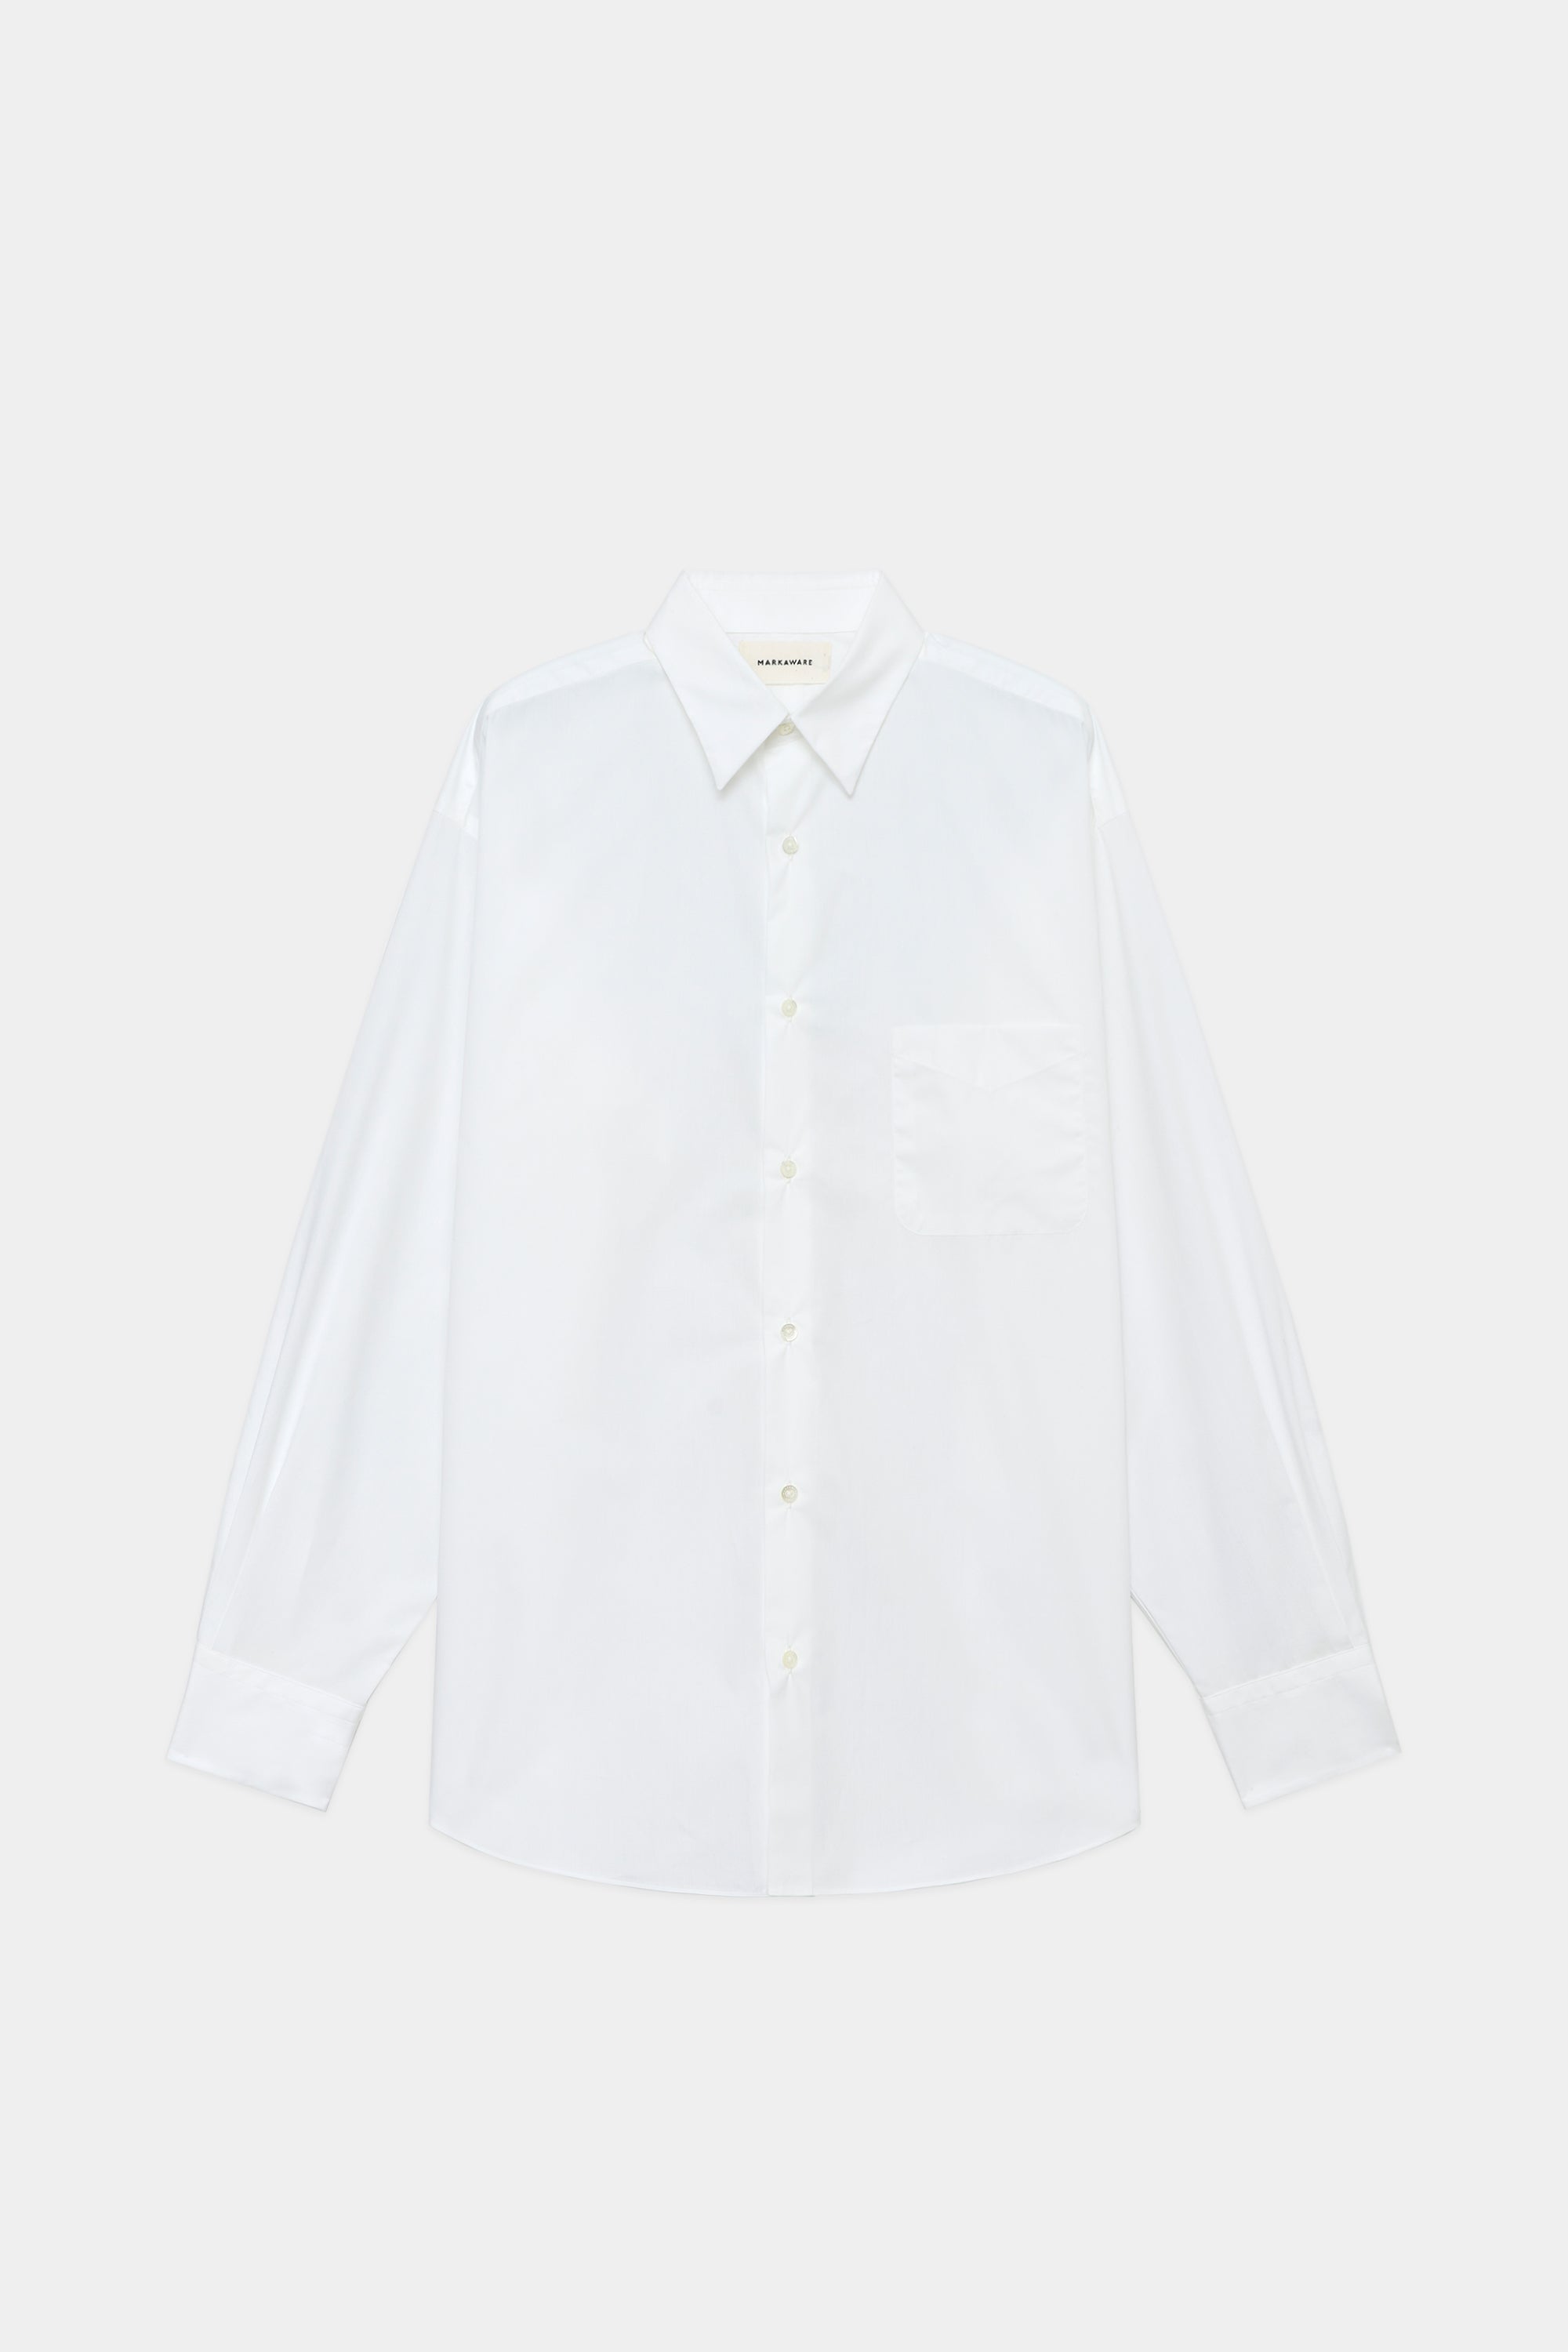 SOKTAS ポプリン / コンフォートフィットシャツ, White